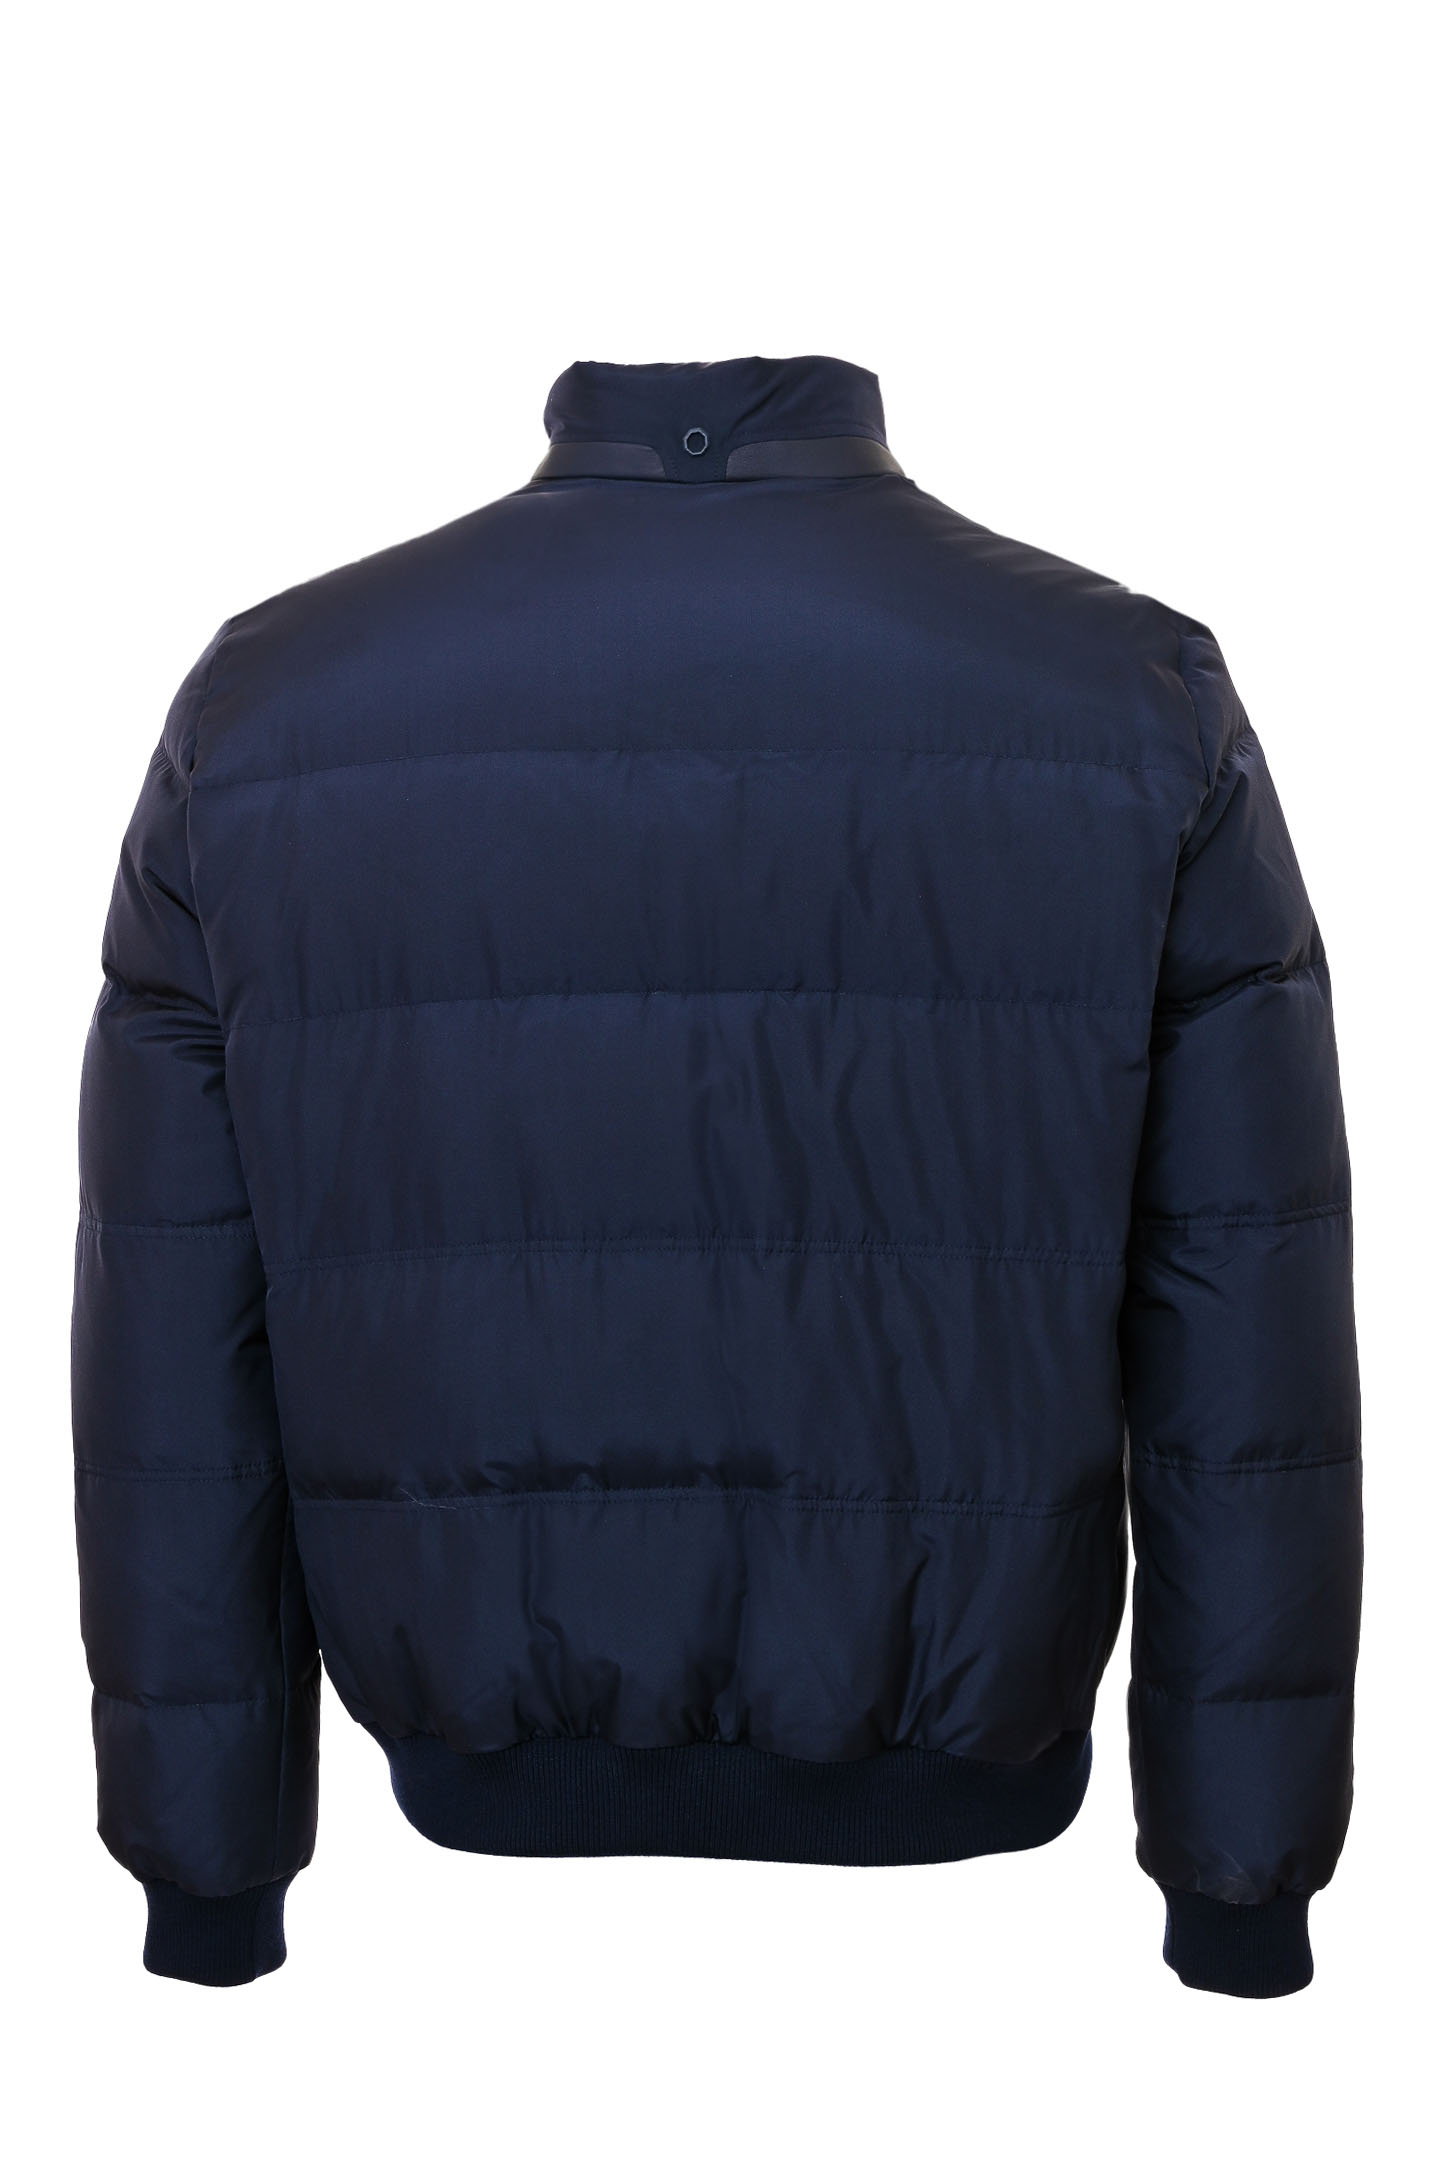 Куртка STEFANO RICCI M7J1400150 SETEC1, цвет: Синий, Мужской